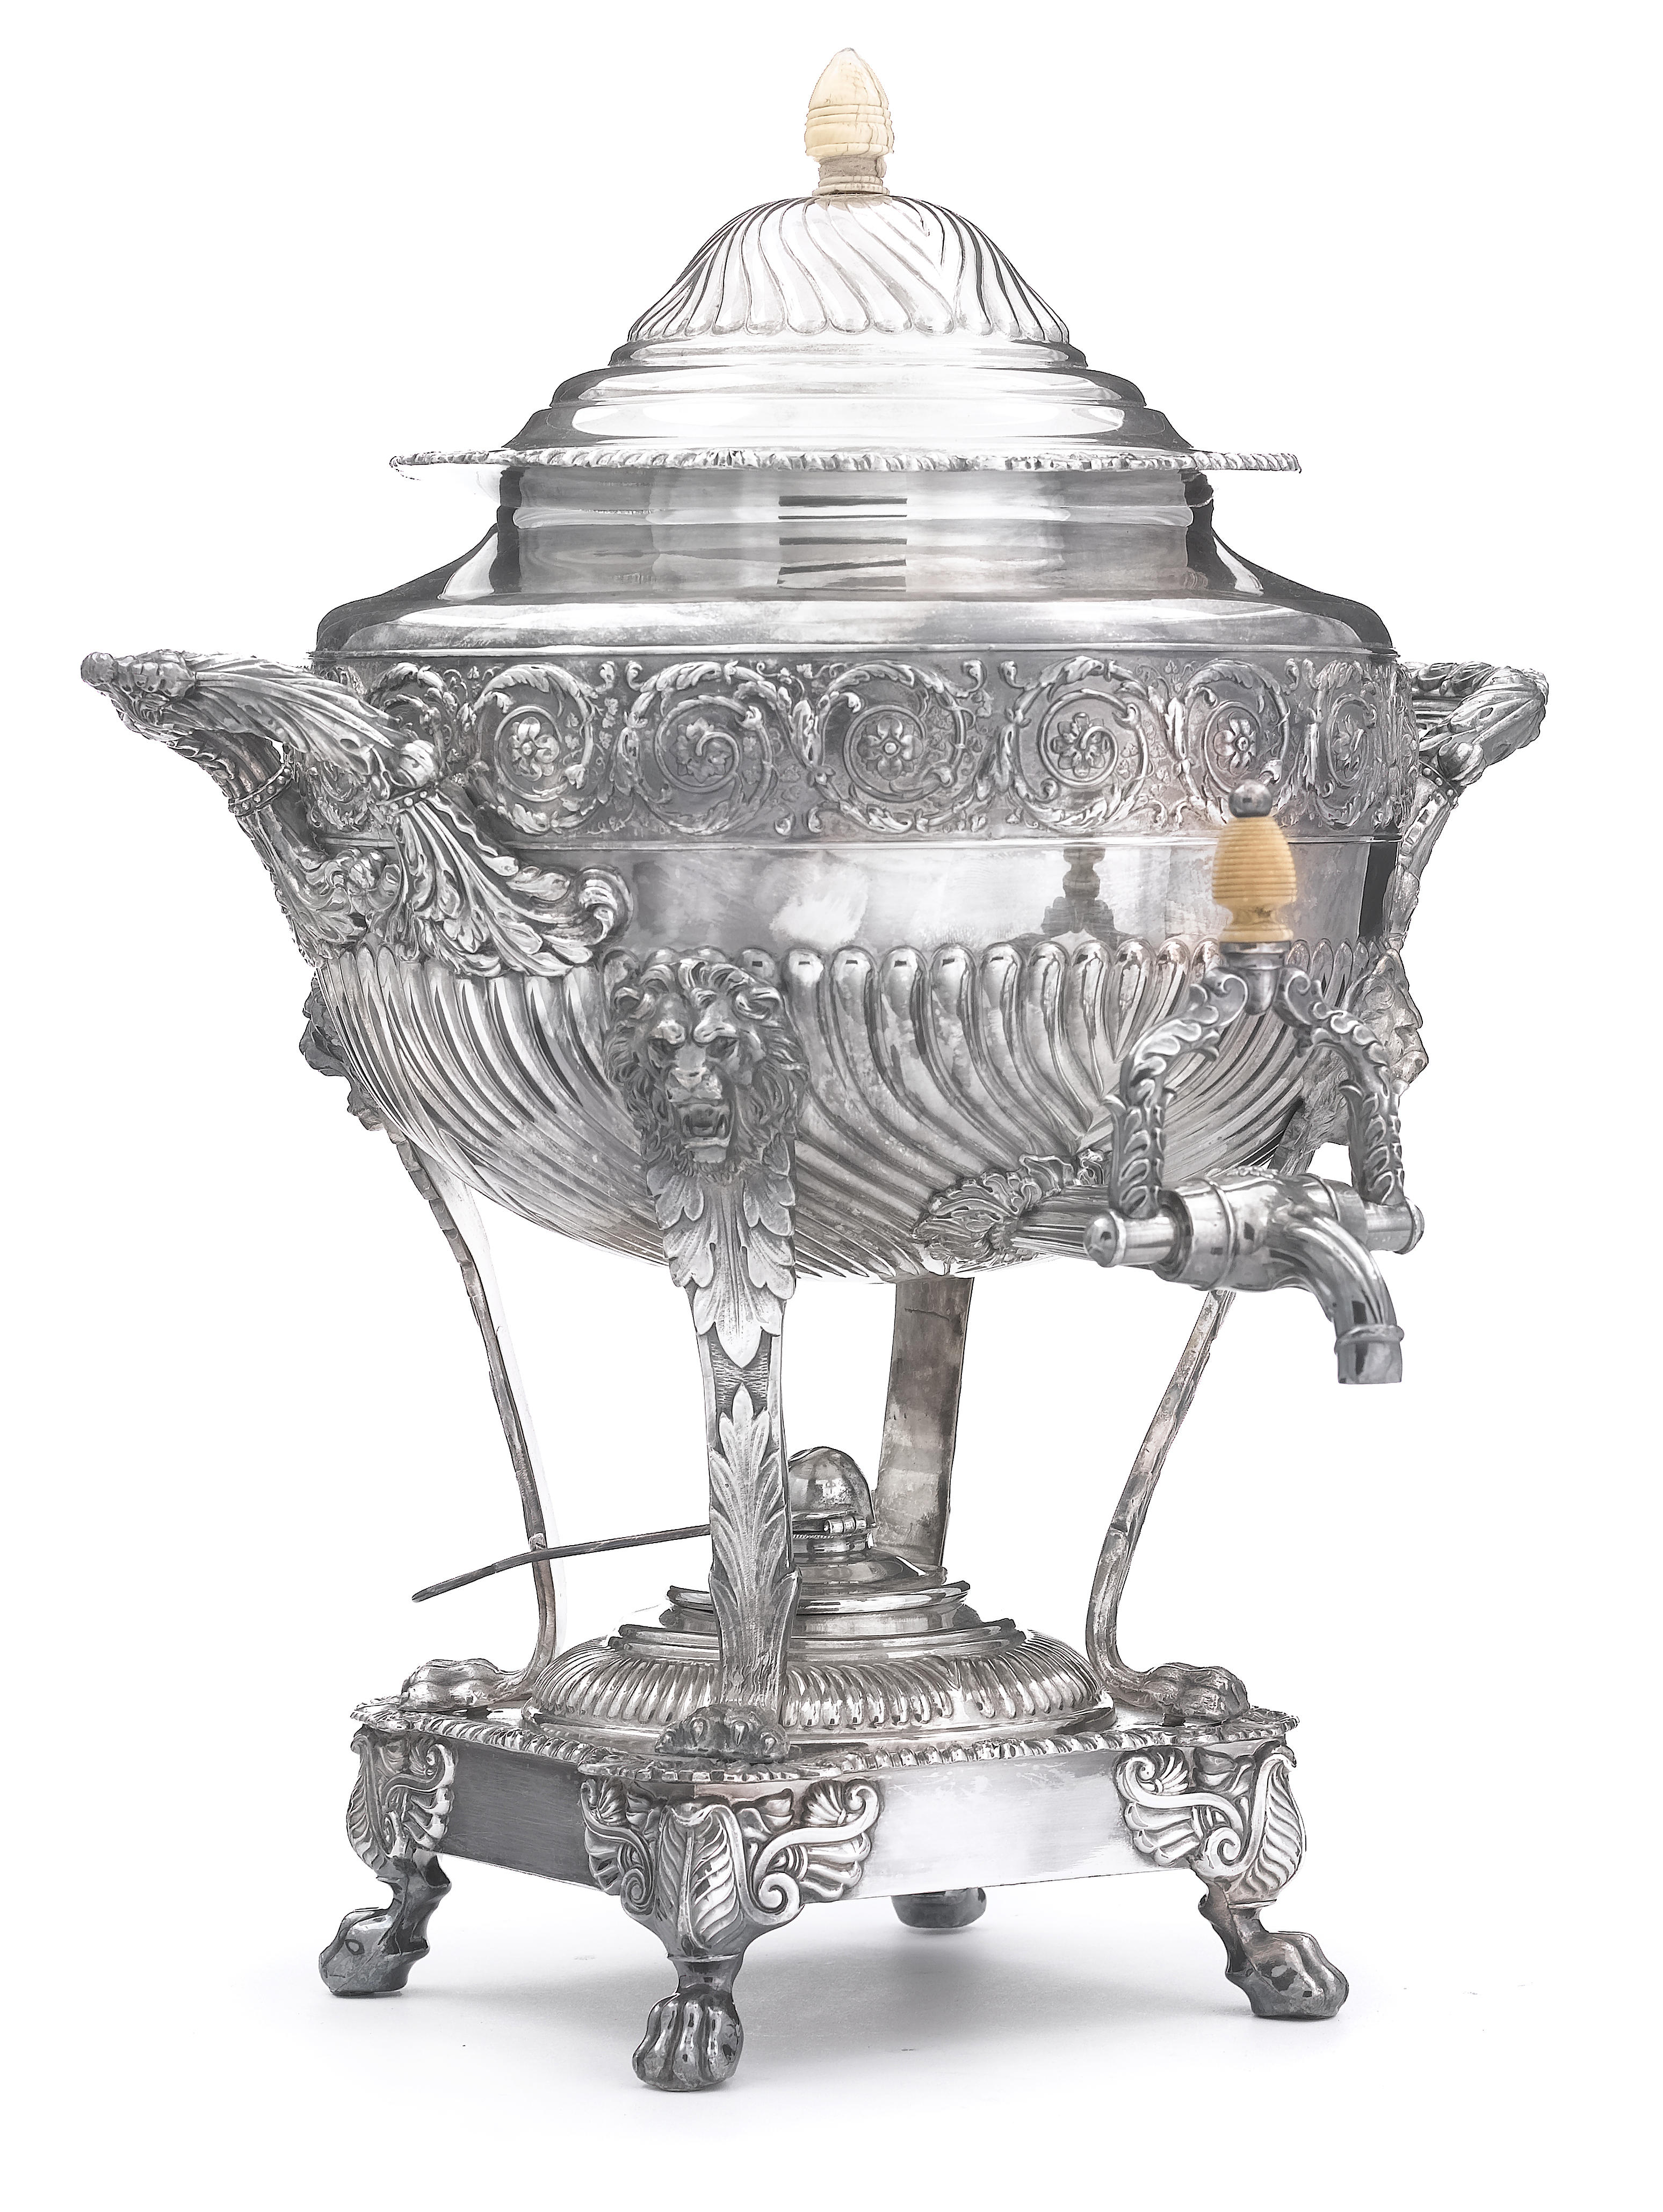 A Sheffield plate hot water urn 129103